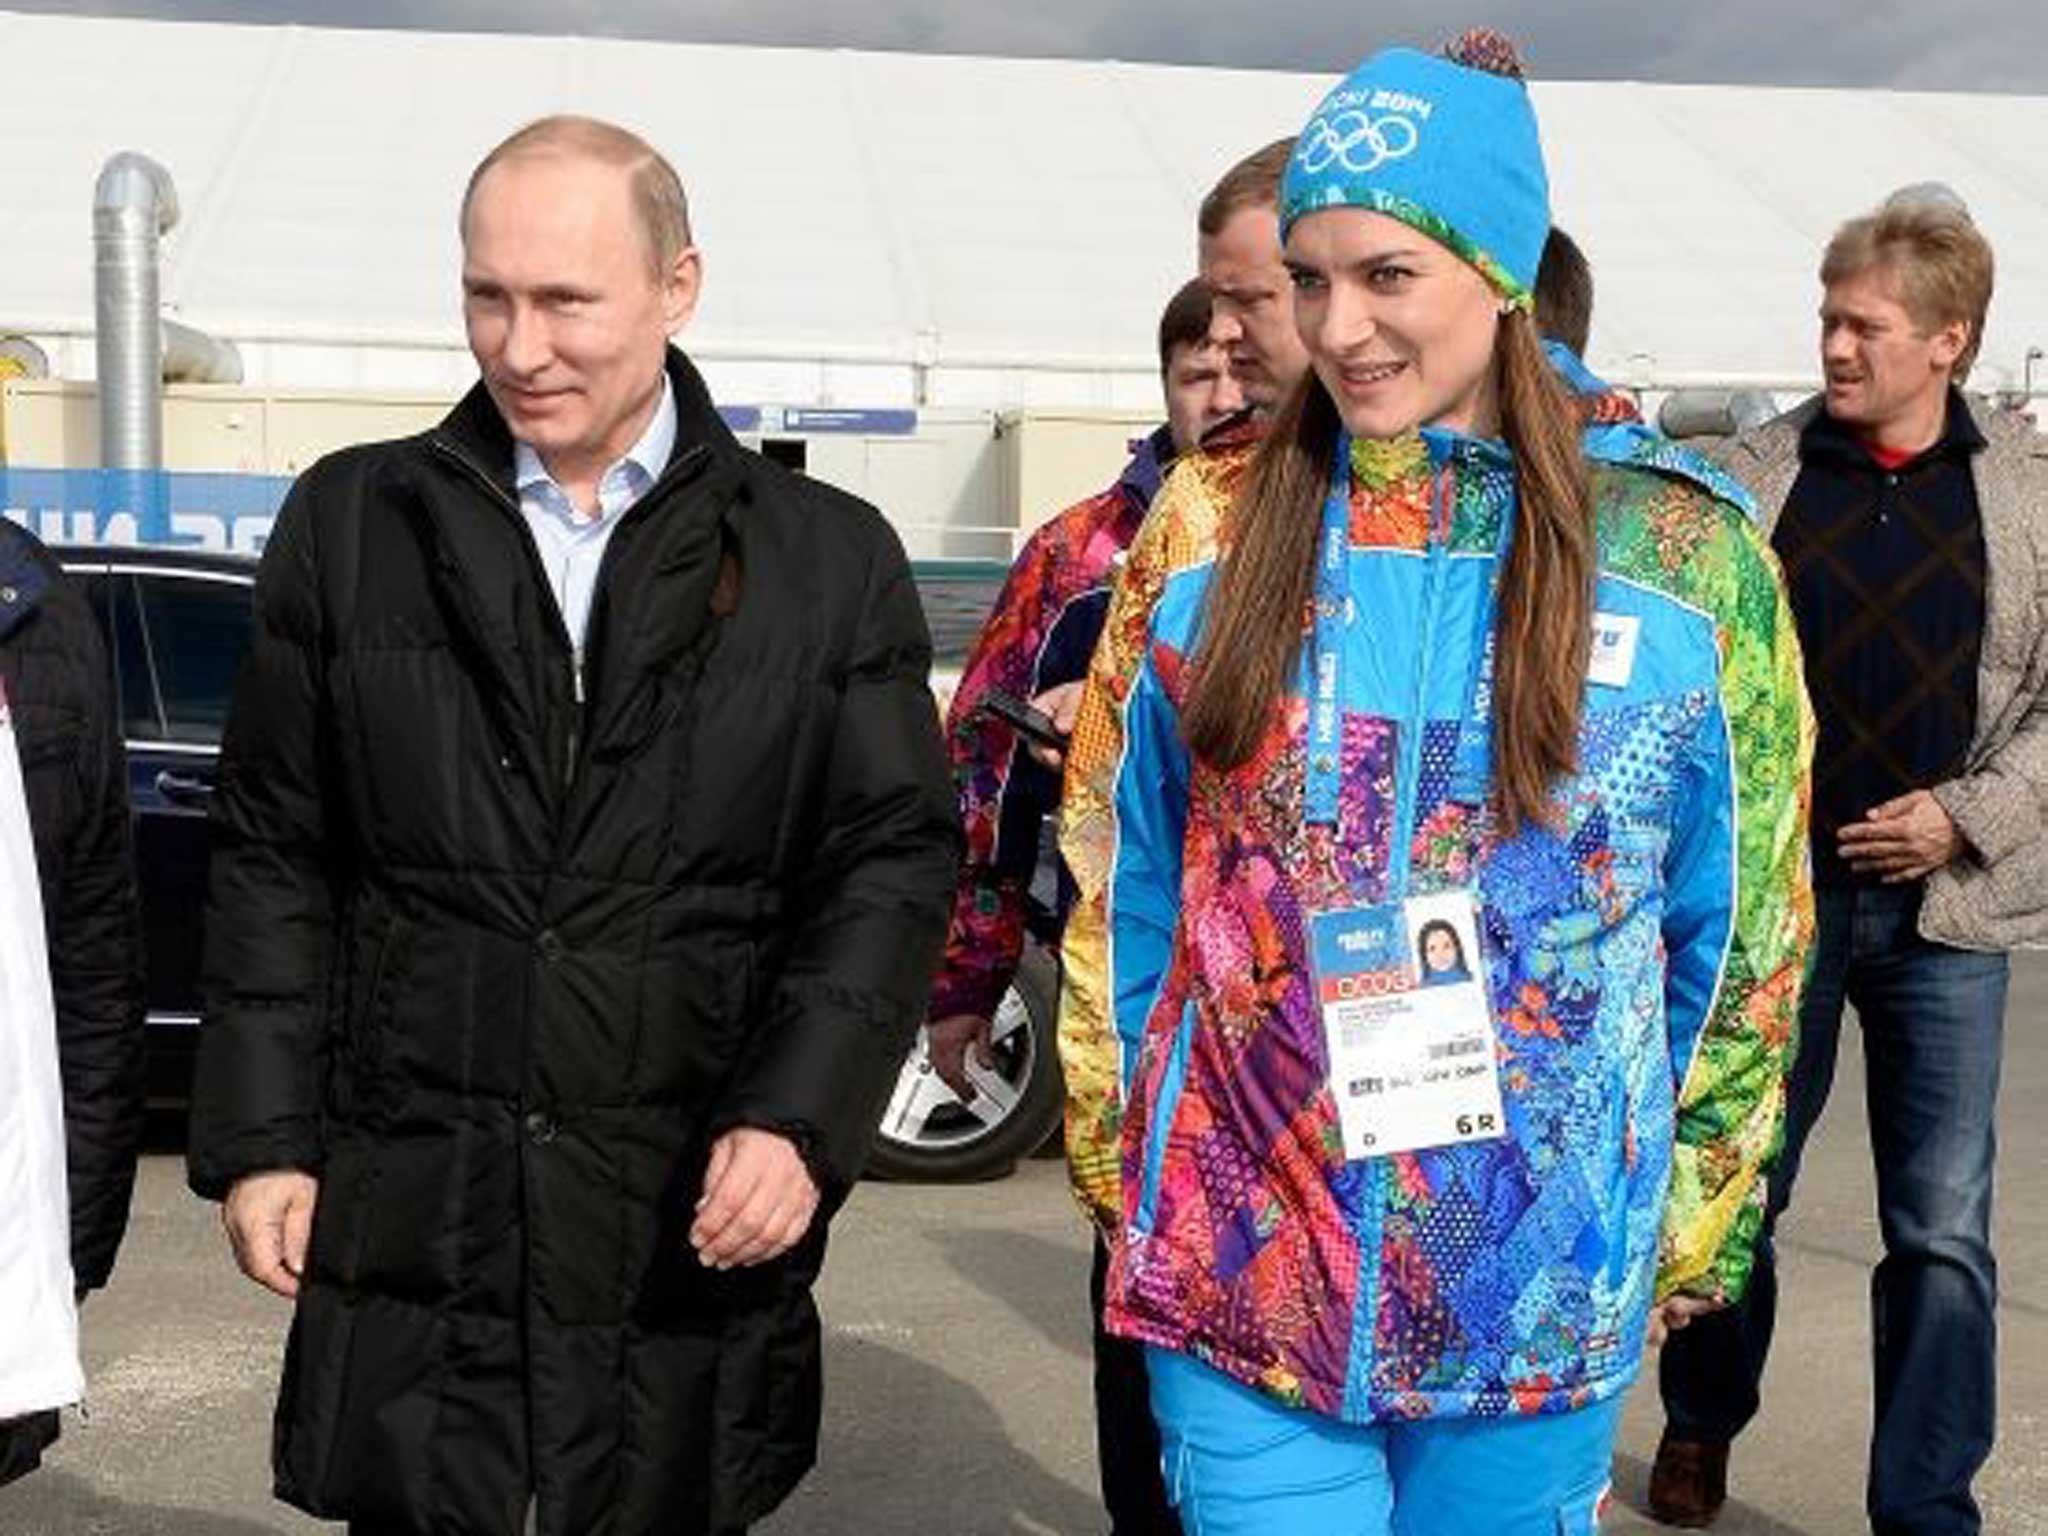 Putin has thrown £30bn at the winter games